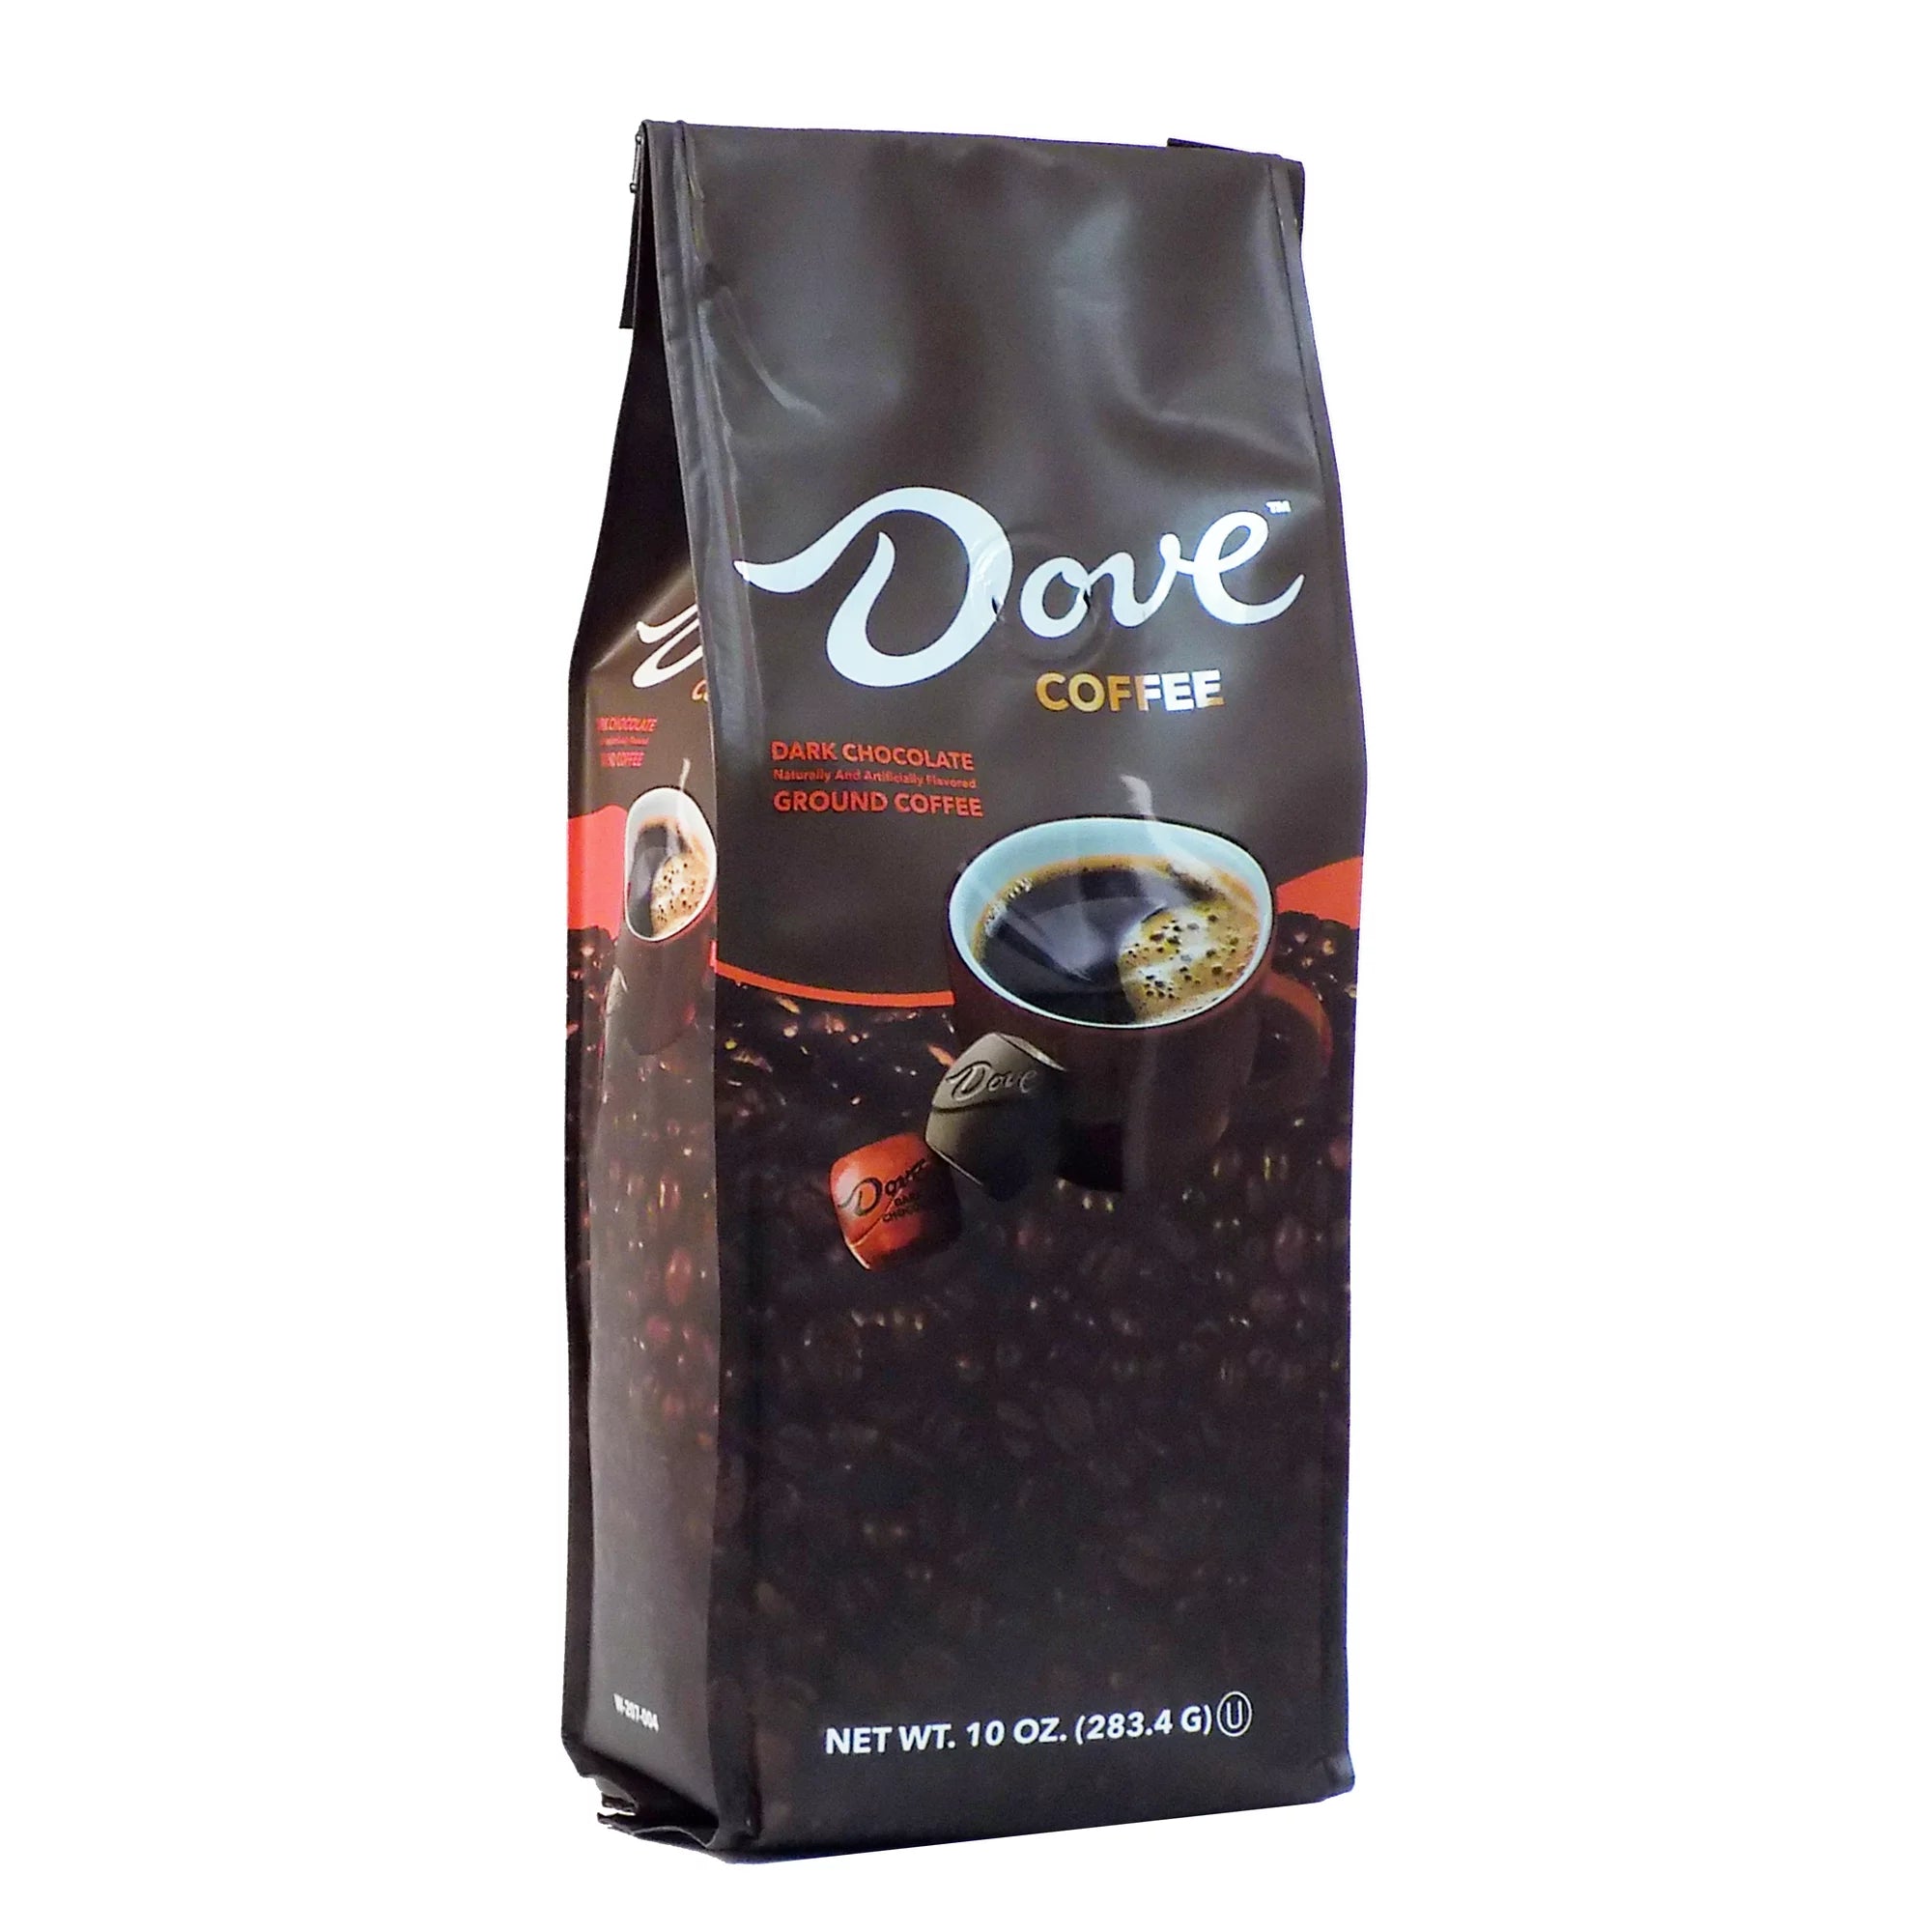 Dove Ground Coffee - 283.4g